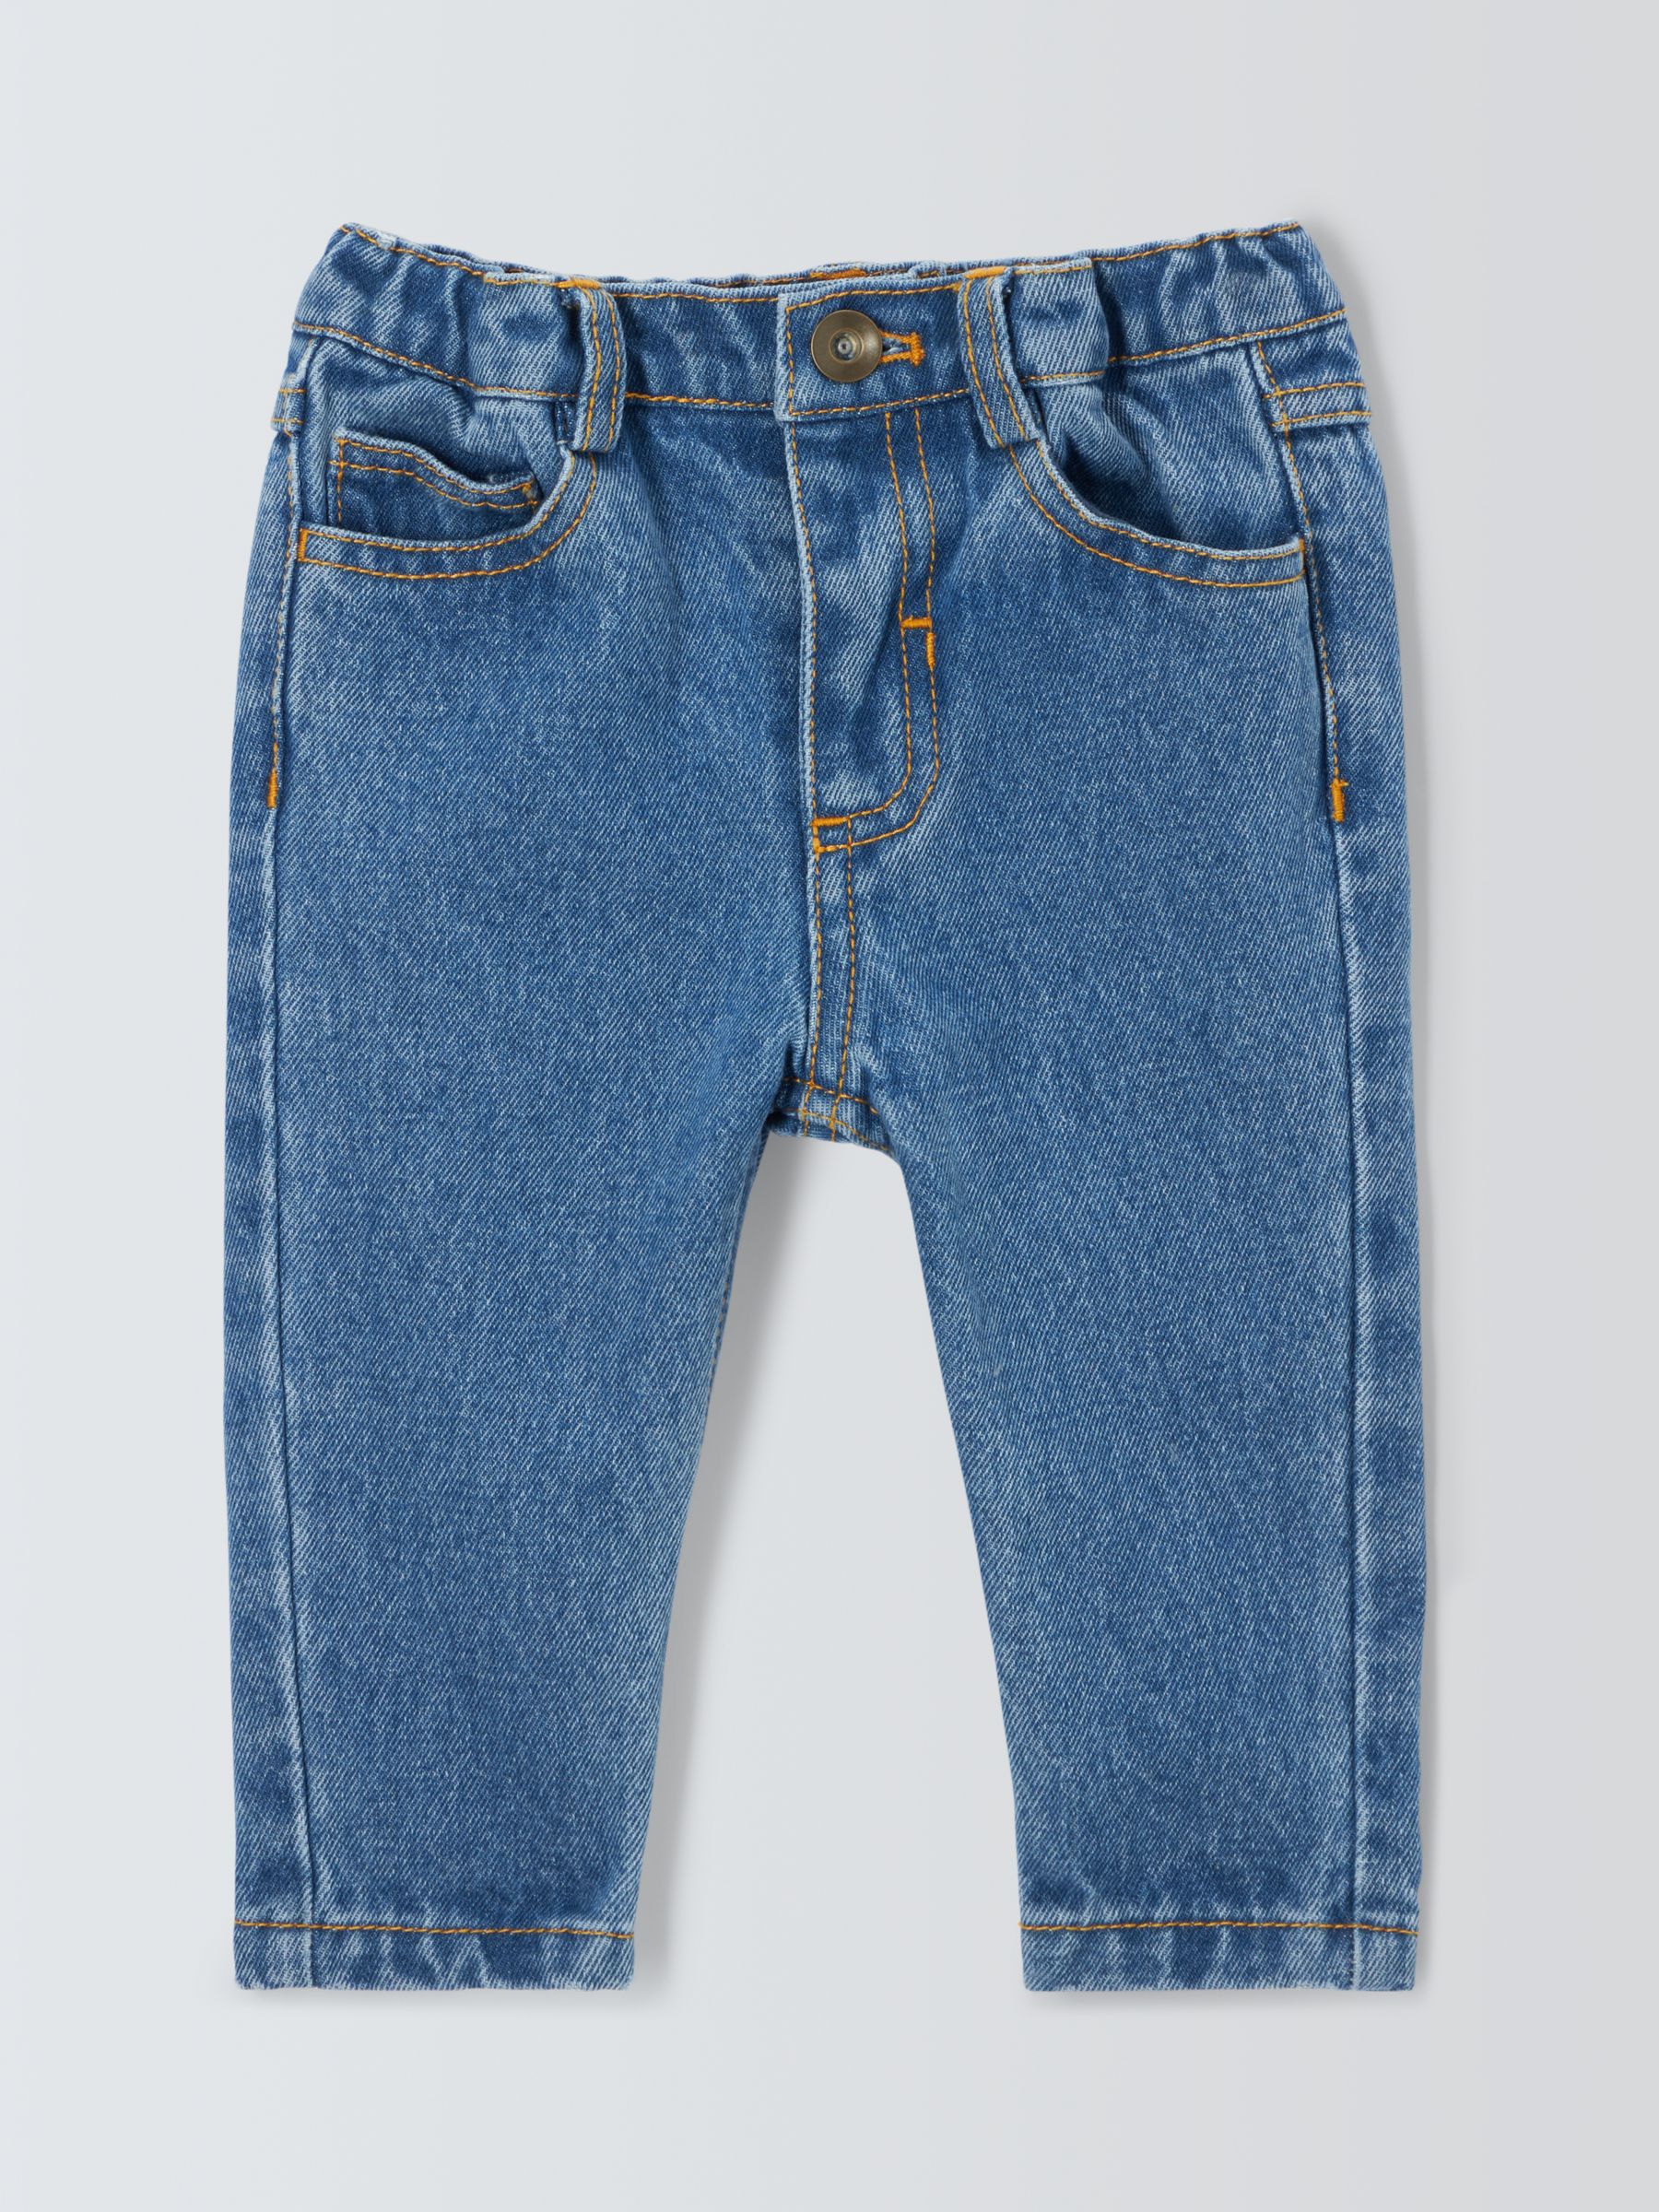 John Lewis Baby Cotton Stretch Jeans, Denim, 2-3 years